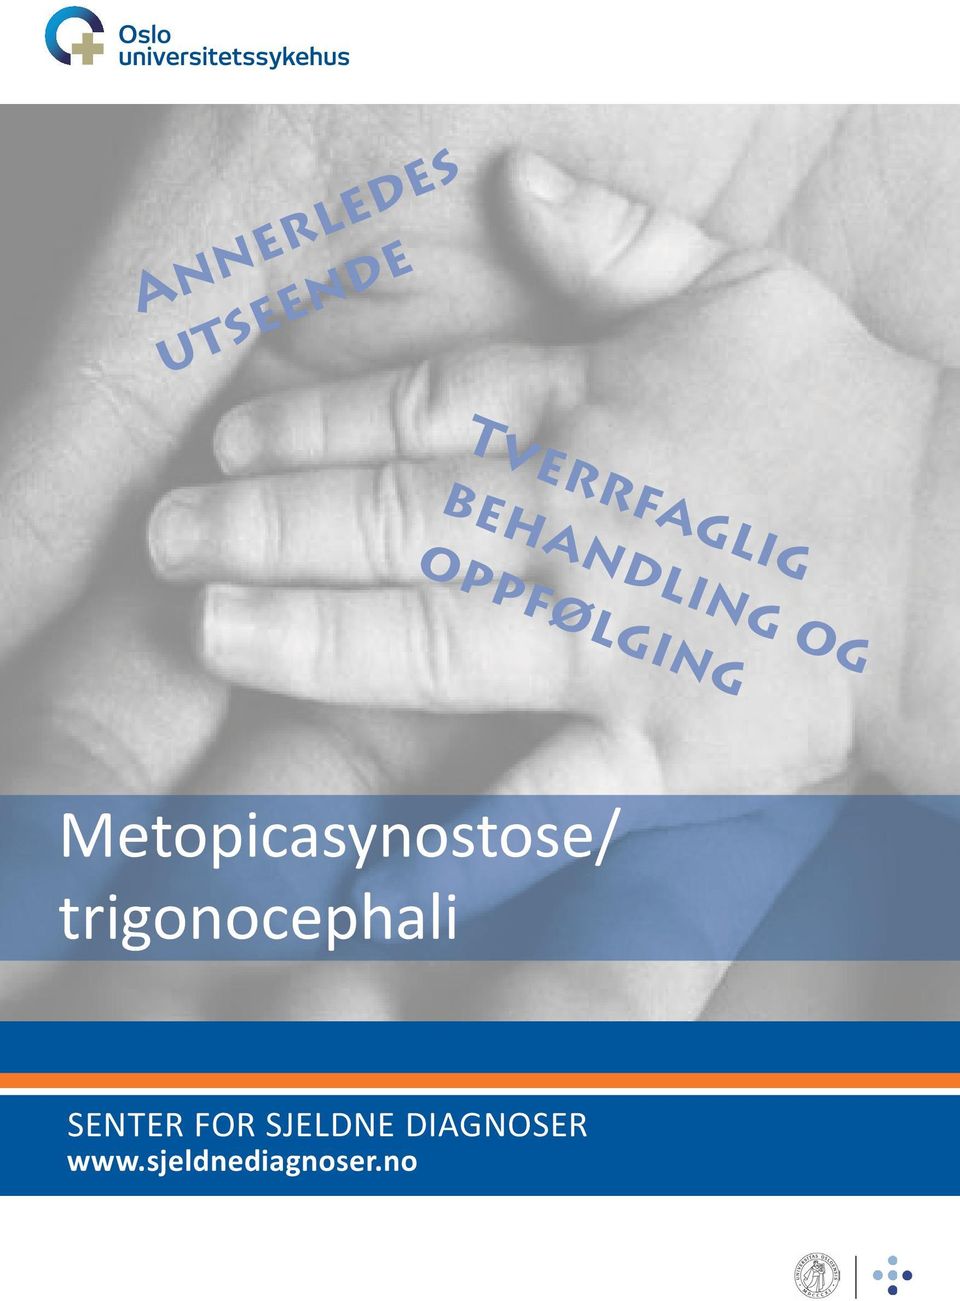 Metopicasynostose/ trigonocephali